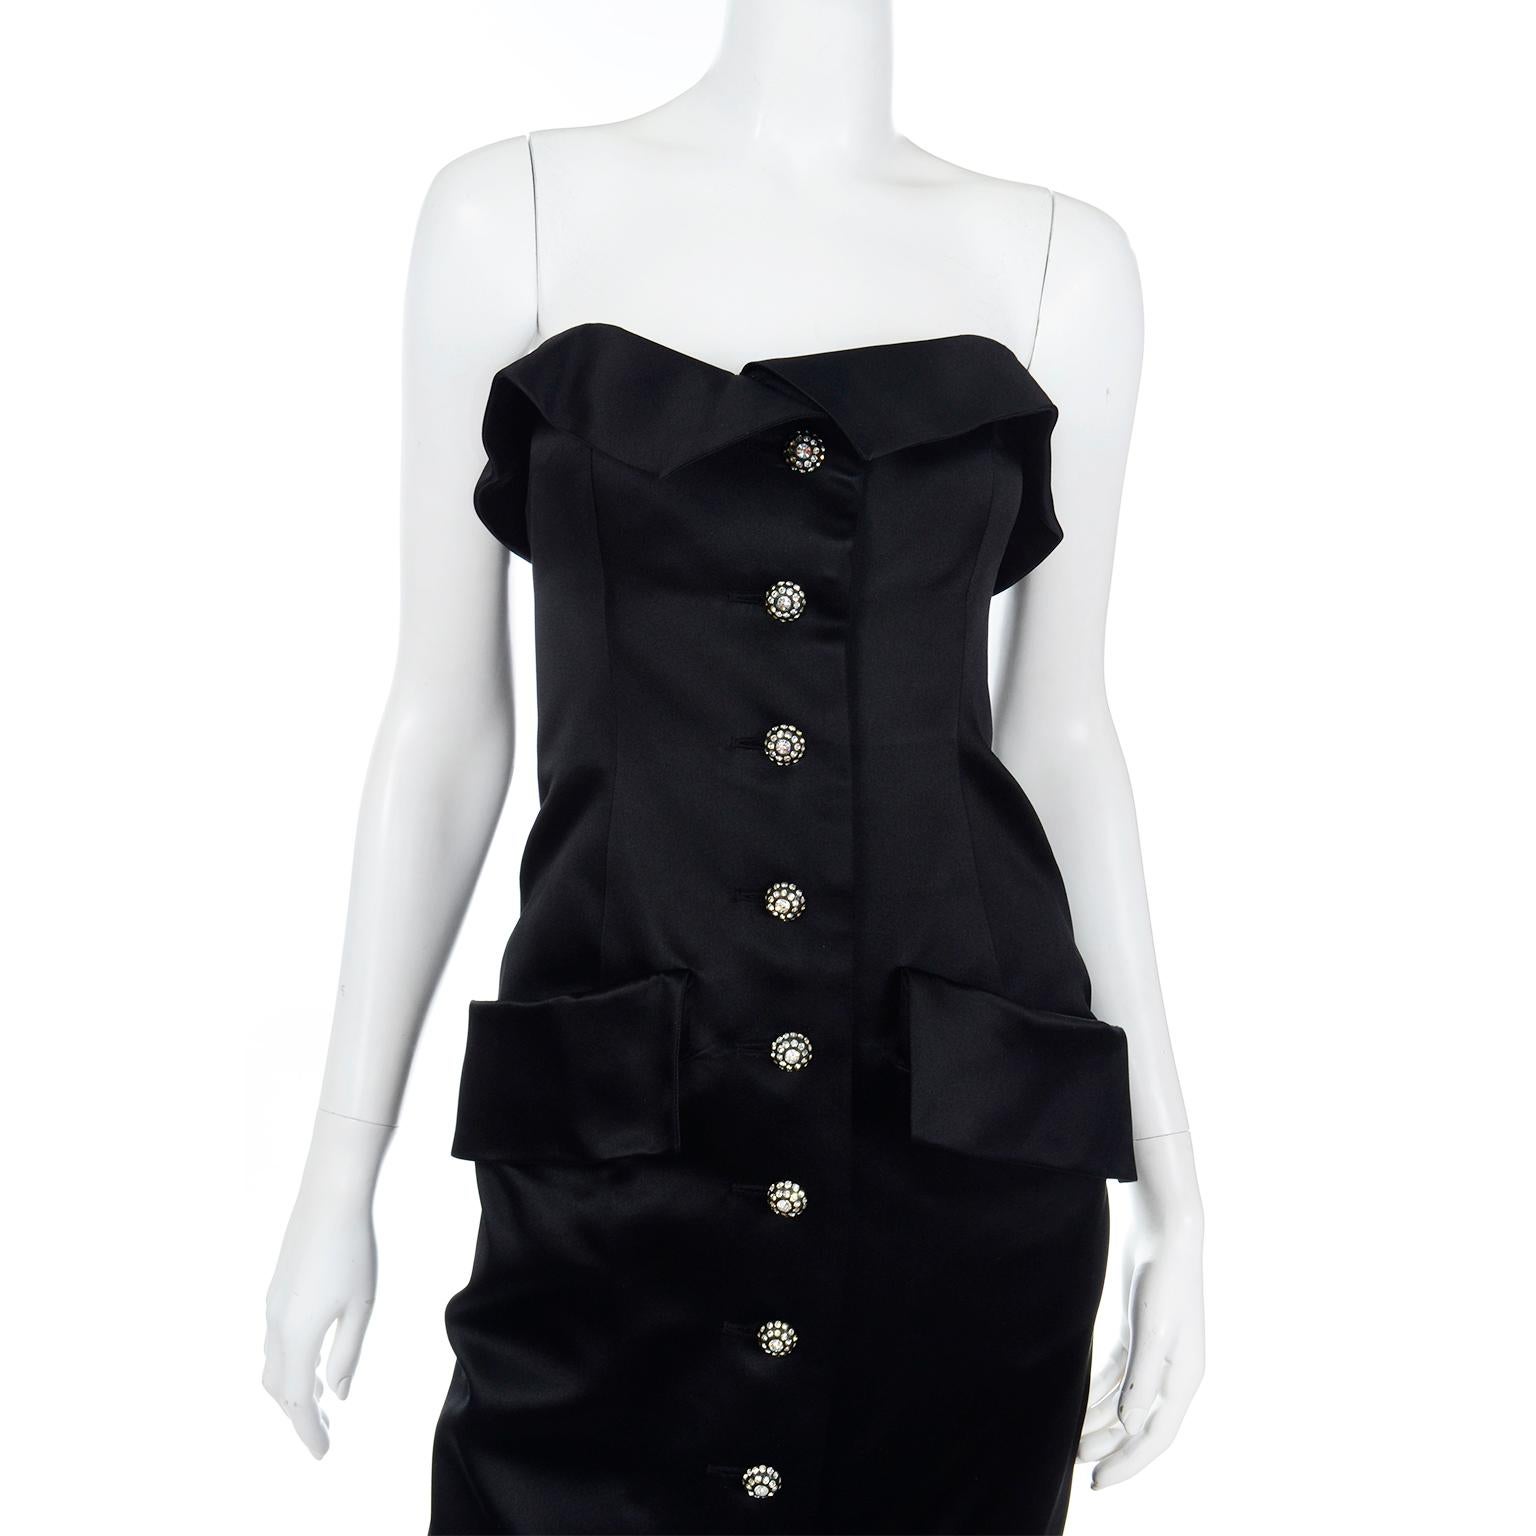 Yves Saint Laurent 1985 Vintage Black Strapless Runway Evening Gown For Sale 2